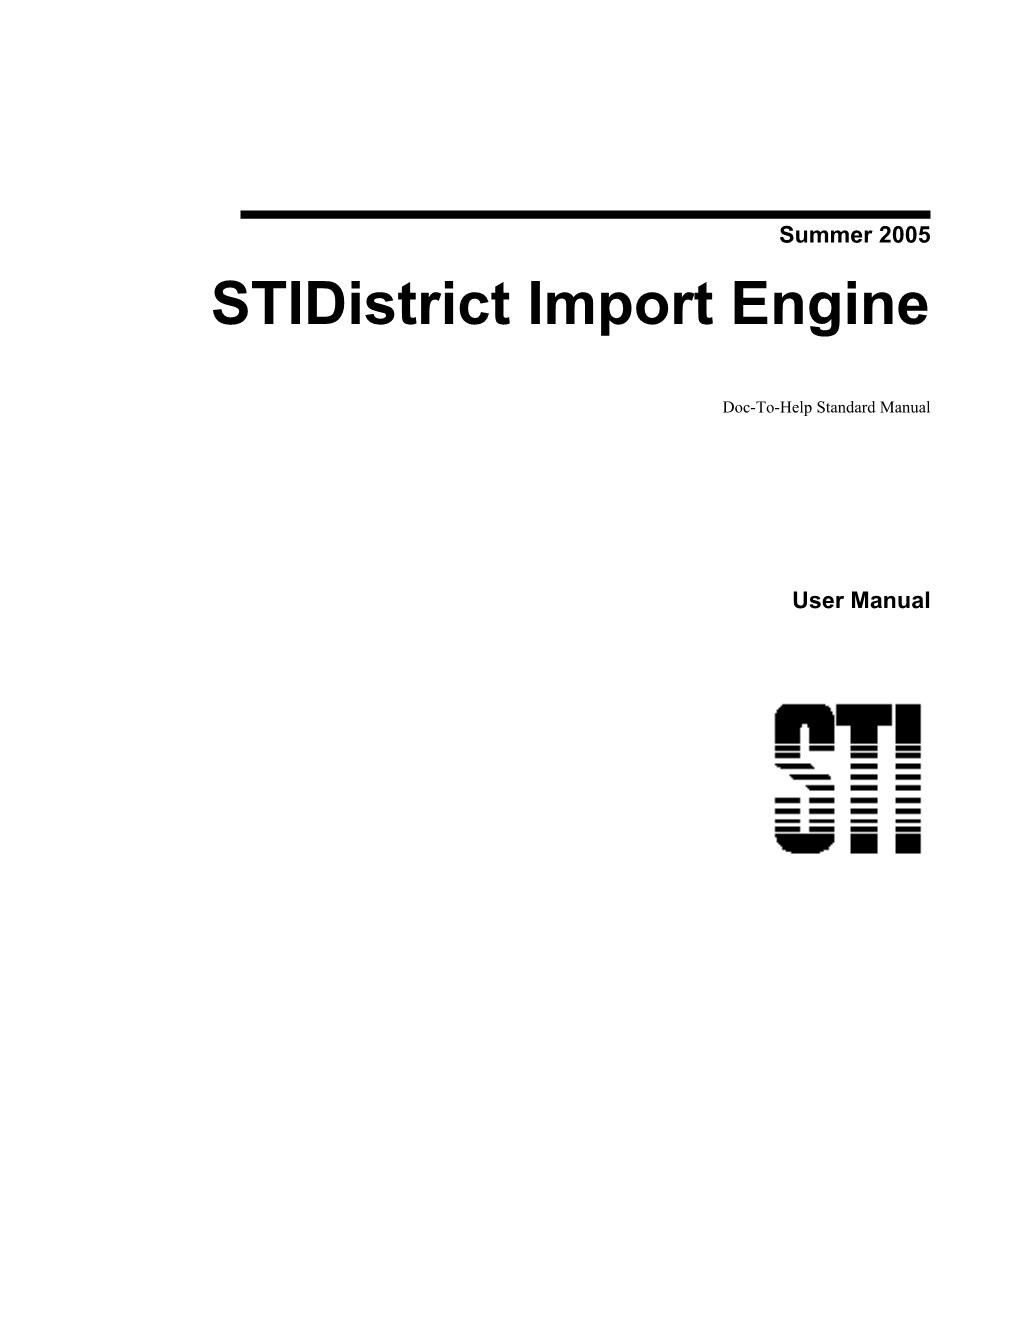 Summer 2005 Stidistrict Import Engine